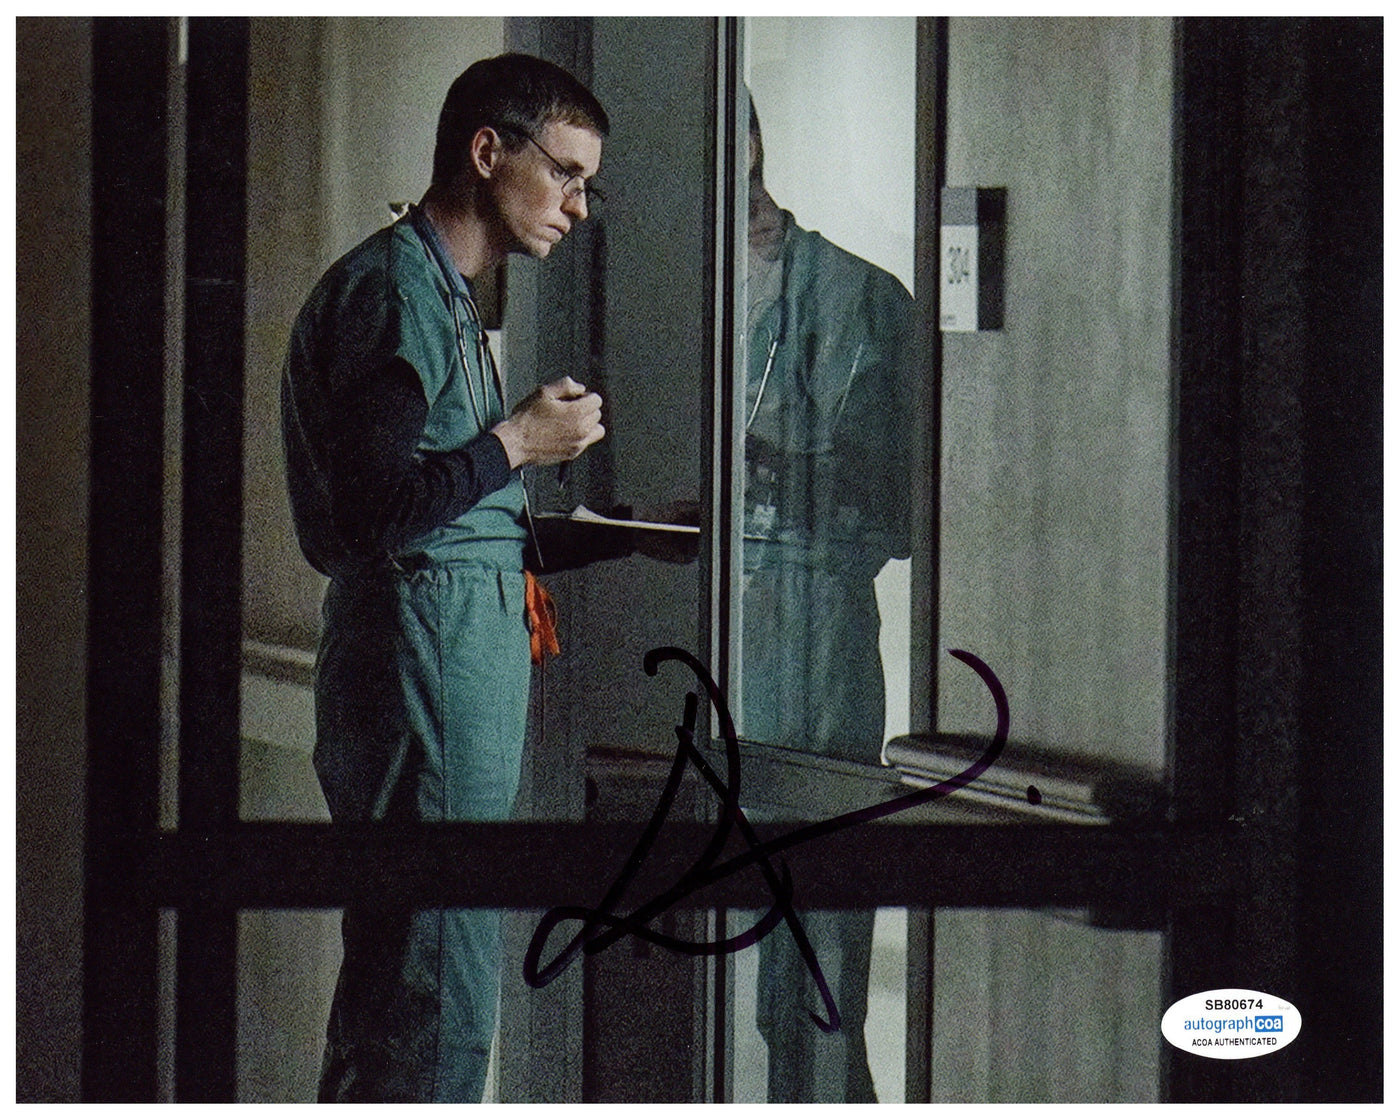 Eddie Redmayne Autographed 8x10 Photo The Good Nurse Signed ACOA